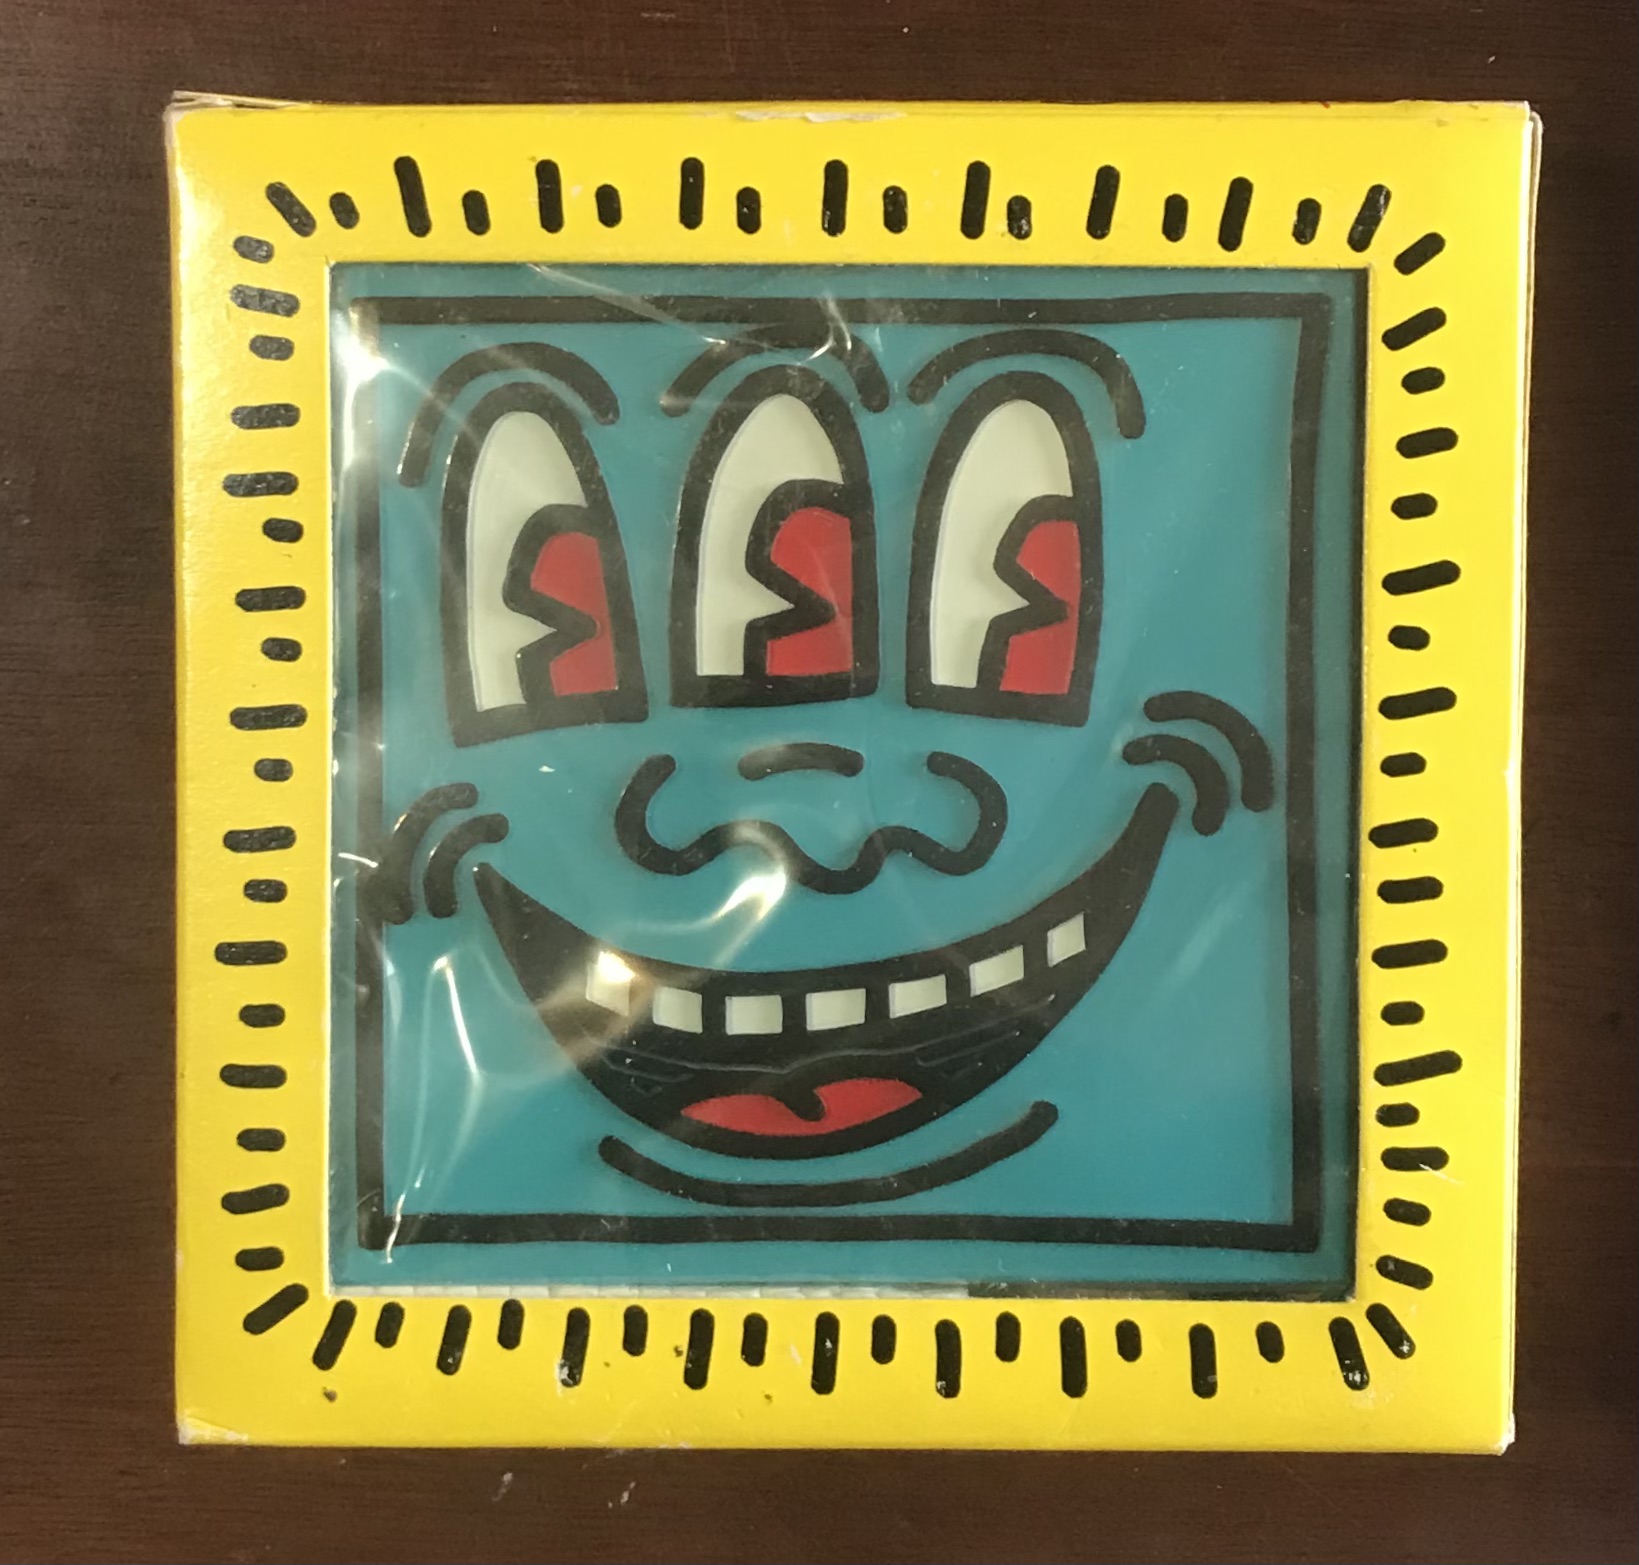 Vernederen Karakteriseren haakje Keith Haring. AM-FM Radio with carrying strap. [New York: Pop Shop] 1985. -  J.N. Herlin, Inc.